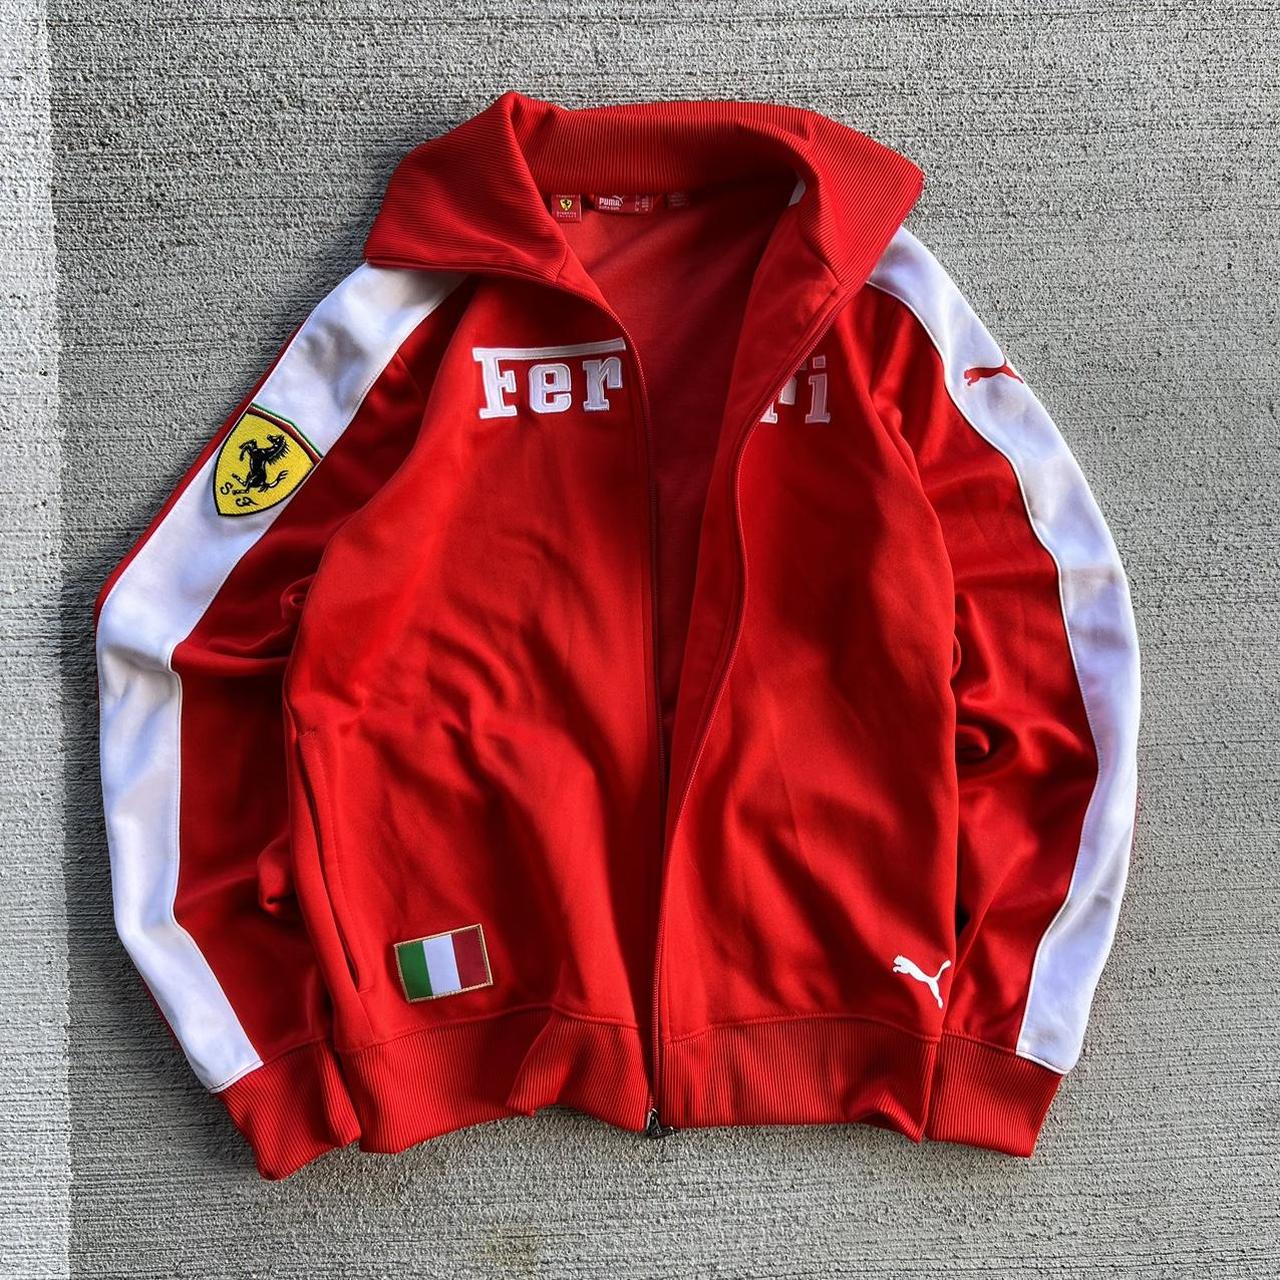 Ferrari Men's Red and White Jacket (5)